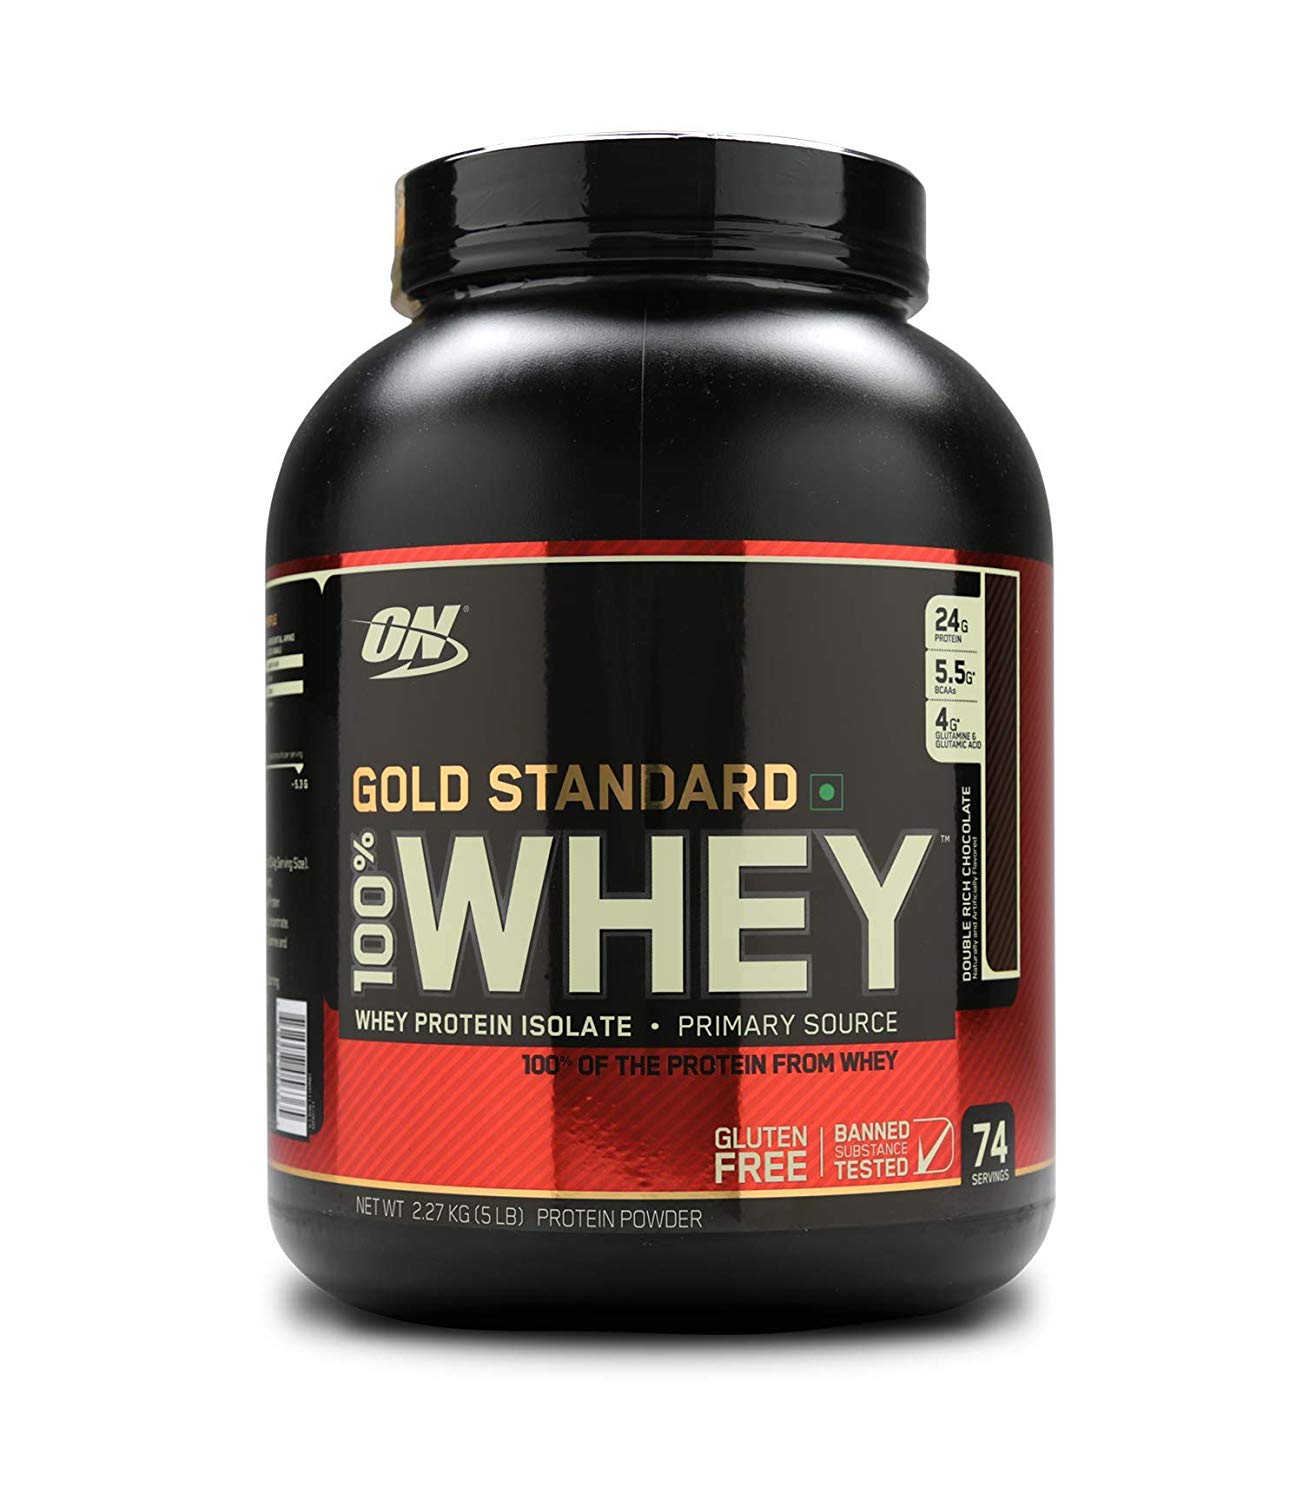 Optimum Nutrition (ON) Gold Standard 100% Whey Protein Powder - 5 lbs, 2.27 Kg Usage, Benefits 